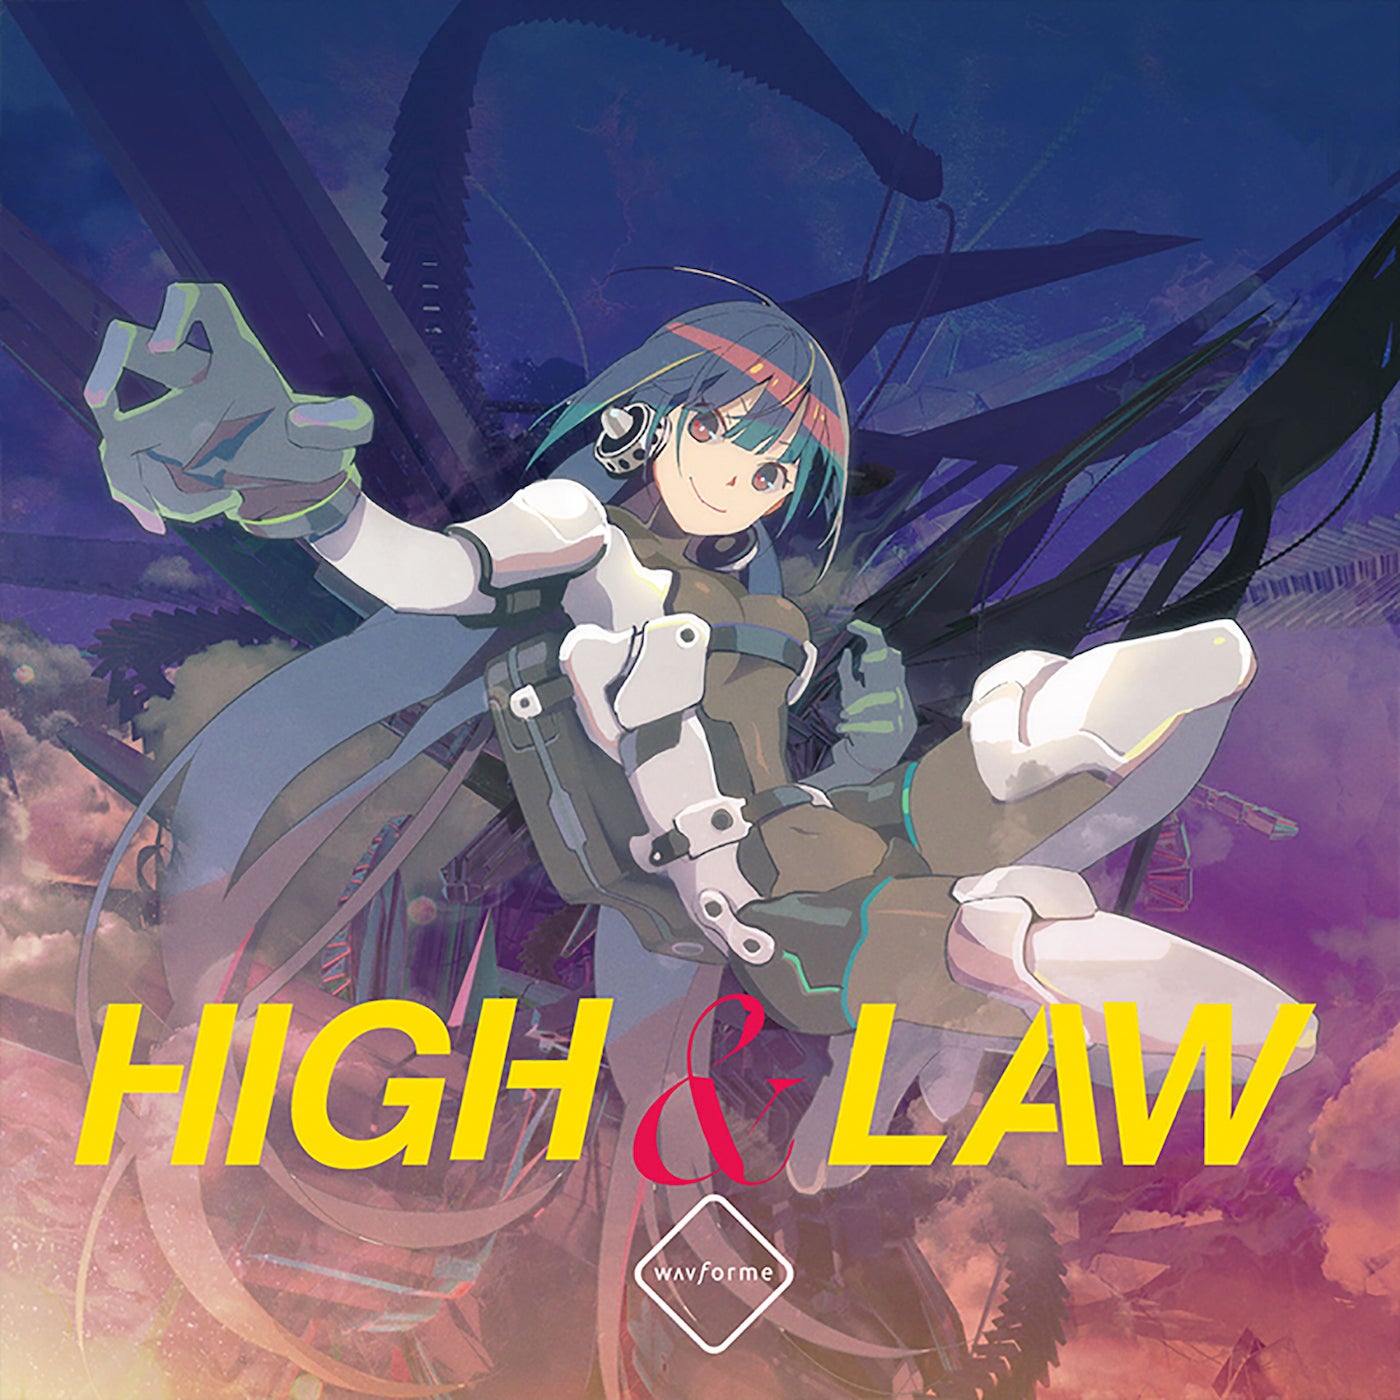 Usao. High and law